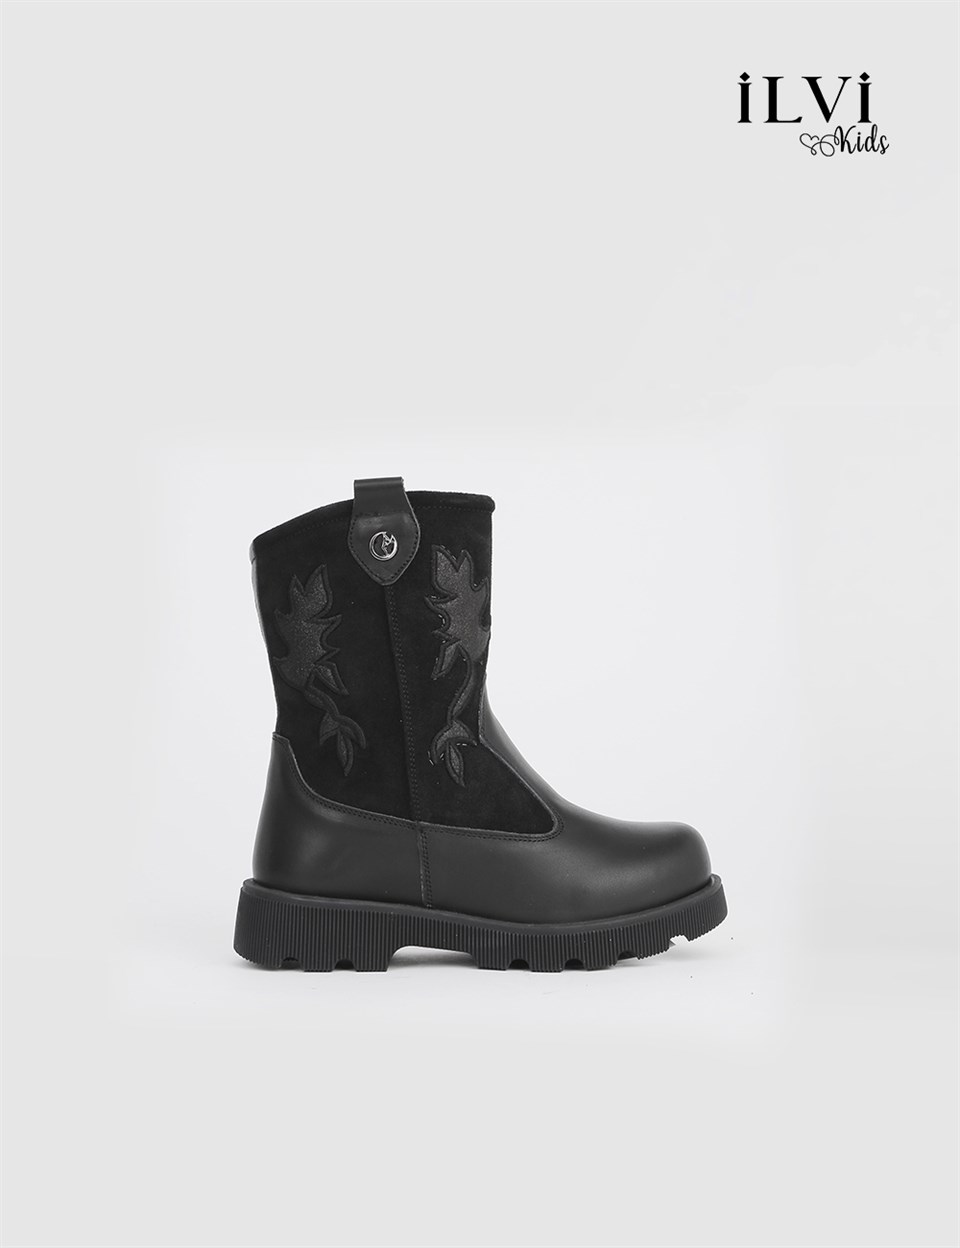 Karden Black Leather Girls' Boot - İLVİ